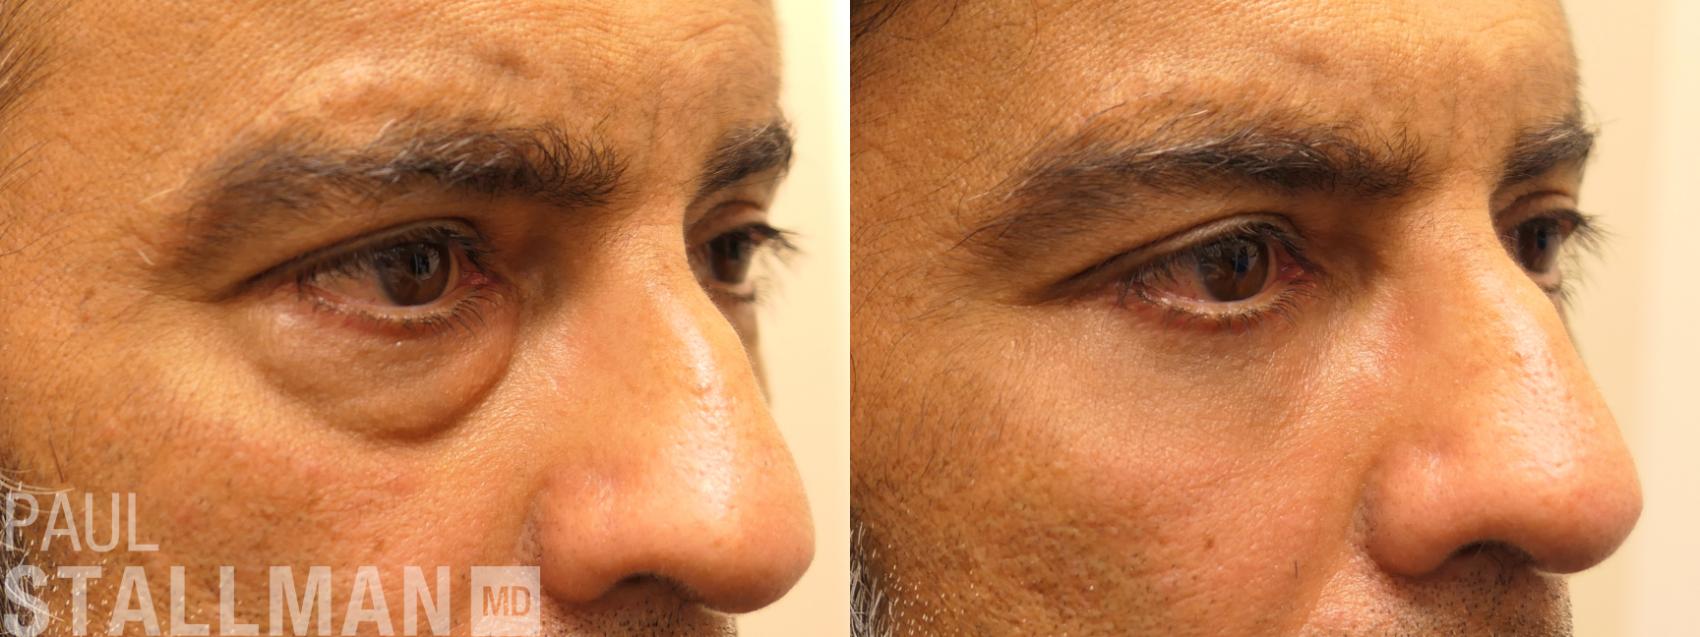 Before & After Blepharoplasty for Men Case 156 Right Oblique View in Fresno, Santa Maria, San Luis Obispo, CA